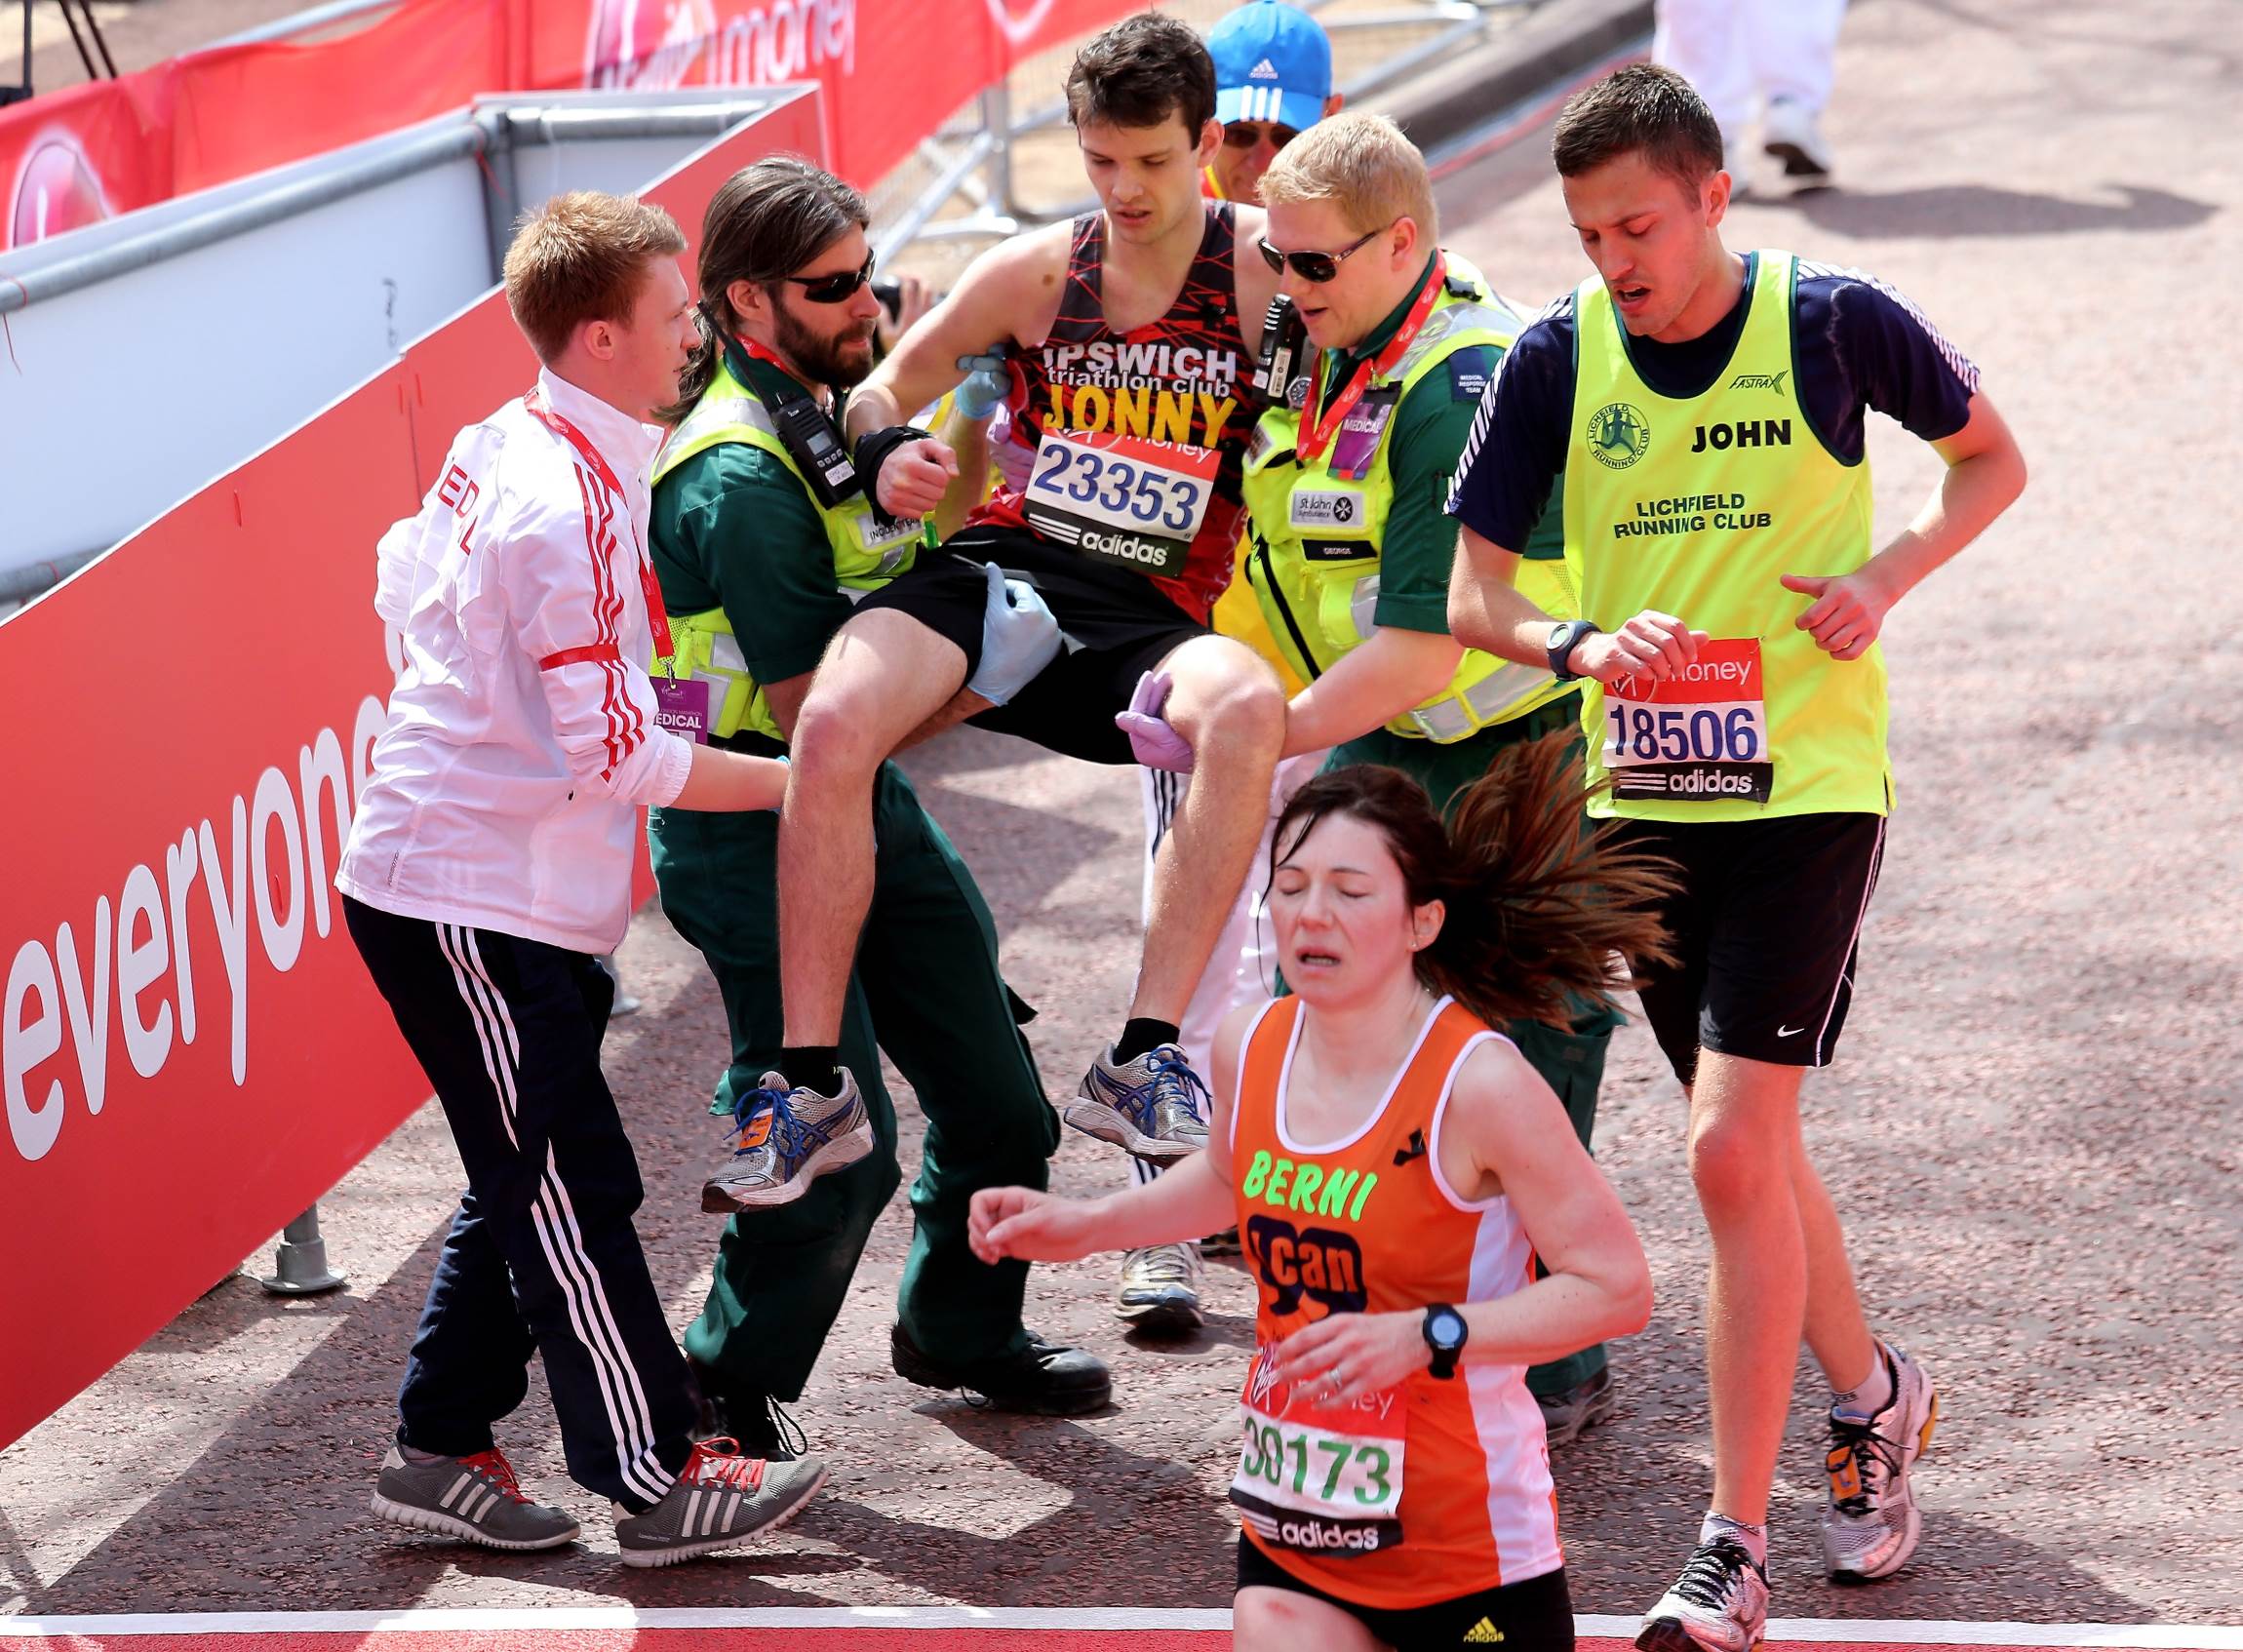 during the Virgin London Marathon 2013 on April 21, 2013 in London, England.